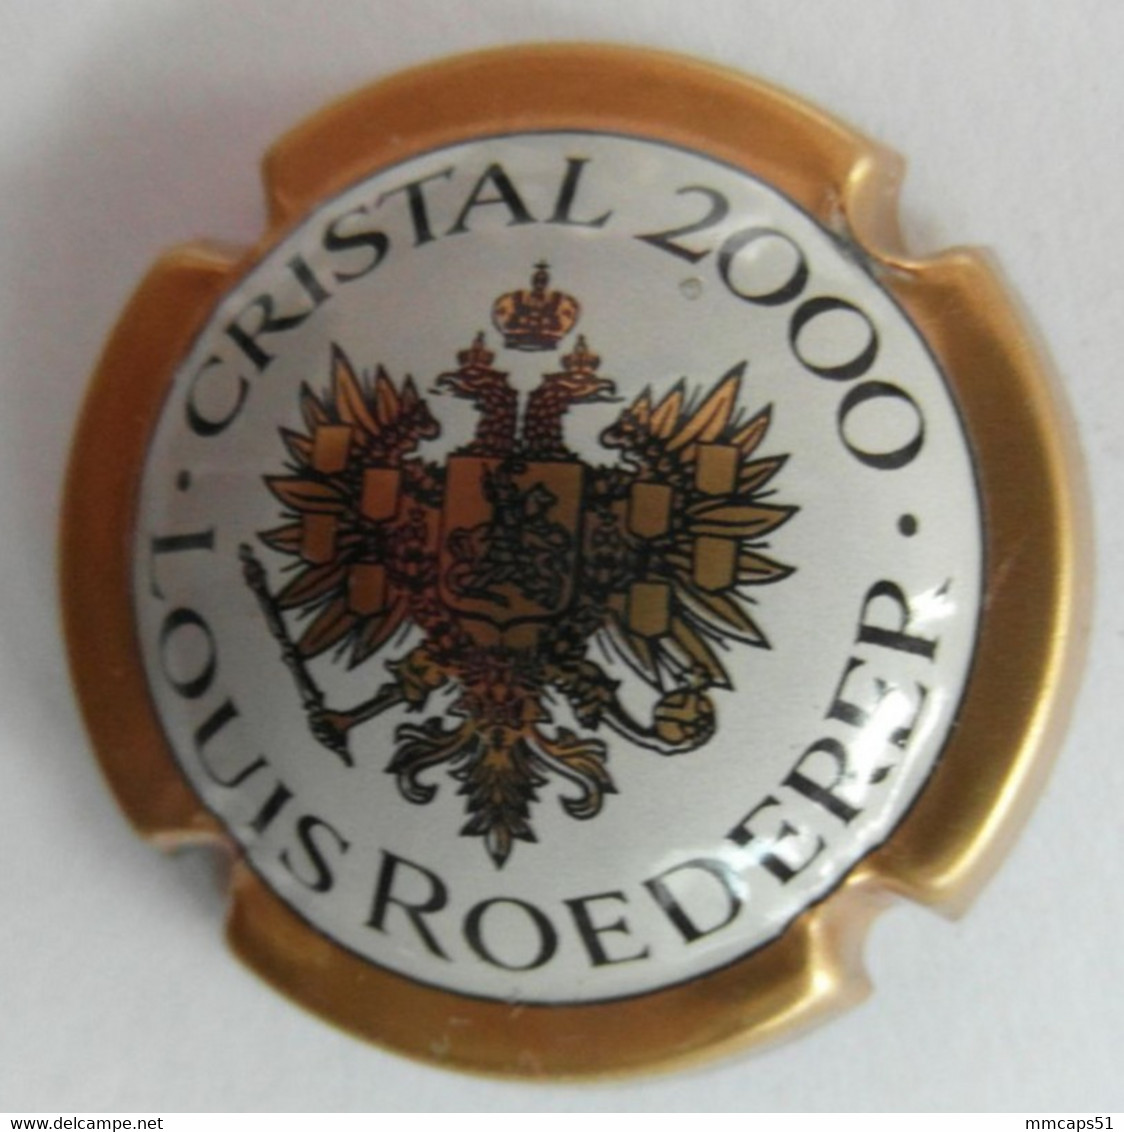 AN 2000 JEROBOAM ROEDERER  Cristal 2000 , N°98 . Capsule De Champagne - Roederer, Louis